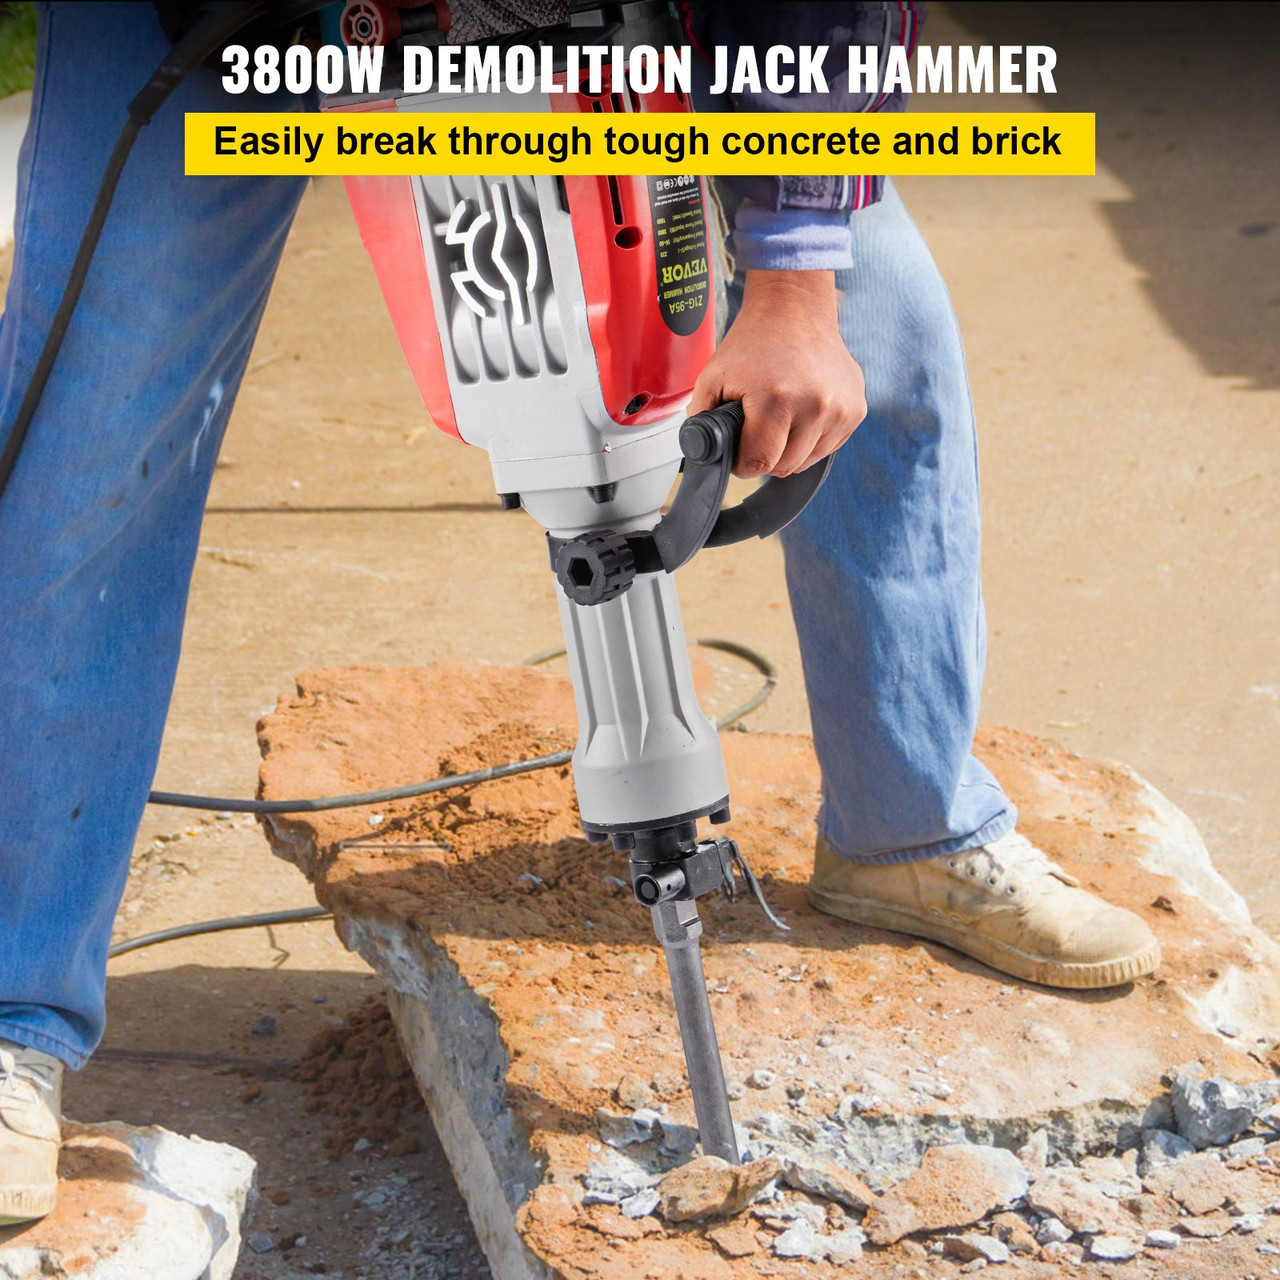 Demolition Jack Hammer, 3800W 1800BPM, 1-1/8' Hex Heavy Duty Concrete Breaker Chisel, Case & Gloves, 110V Industrial Electric Jackhammer for Demolishing, Chipping & Demo, CE Approved, Red